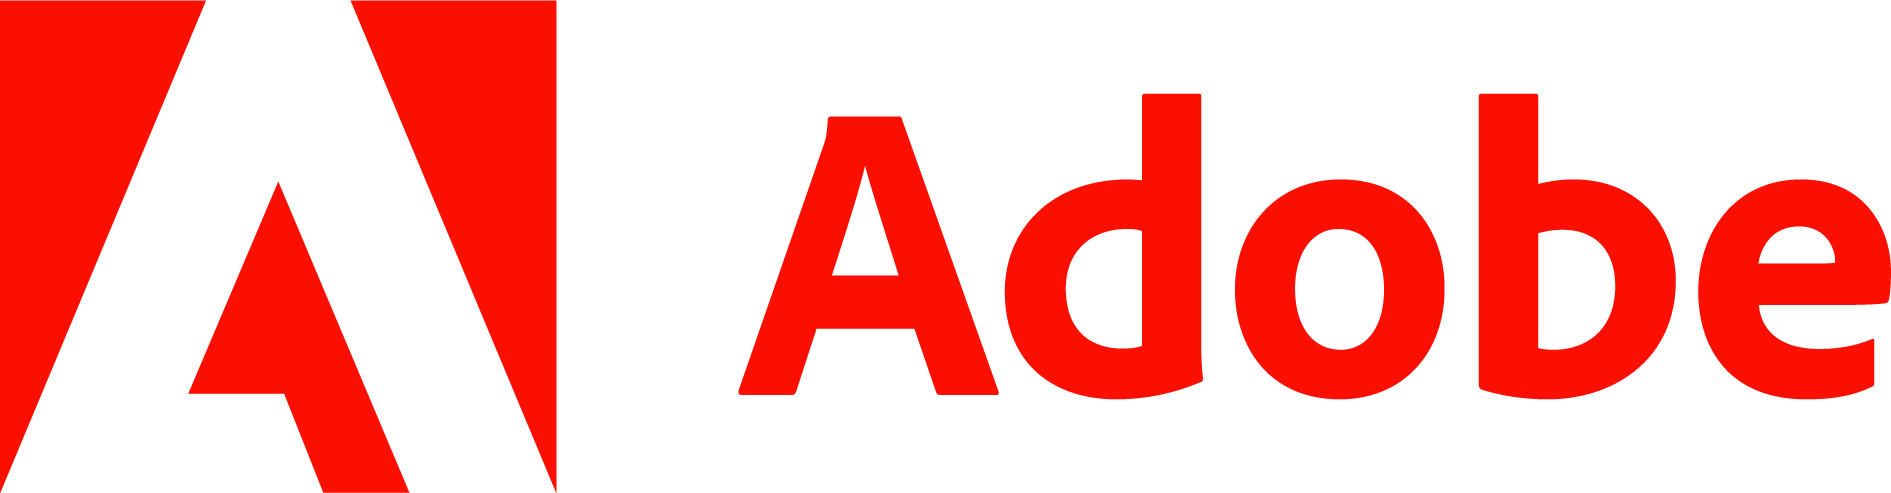 Adobe_Corporate_Logo.png